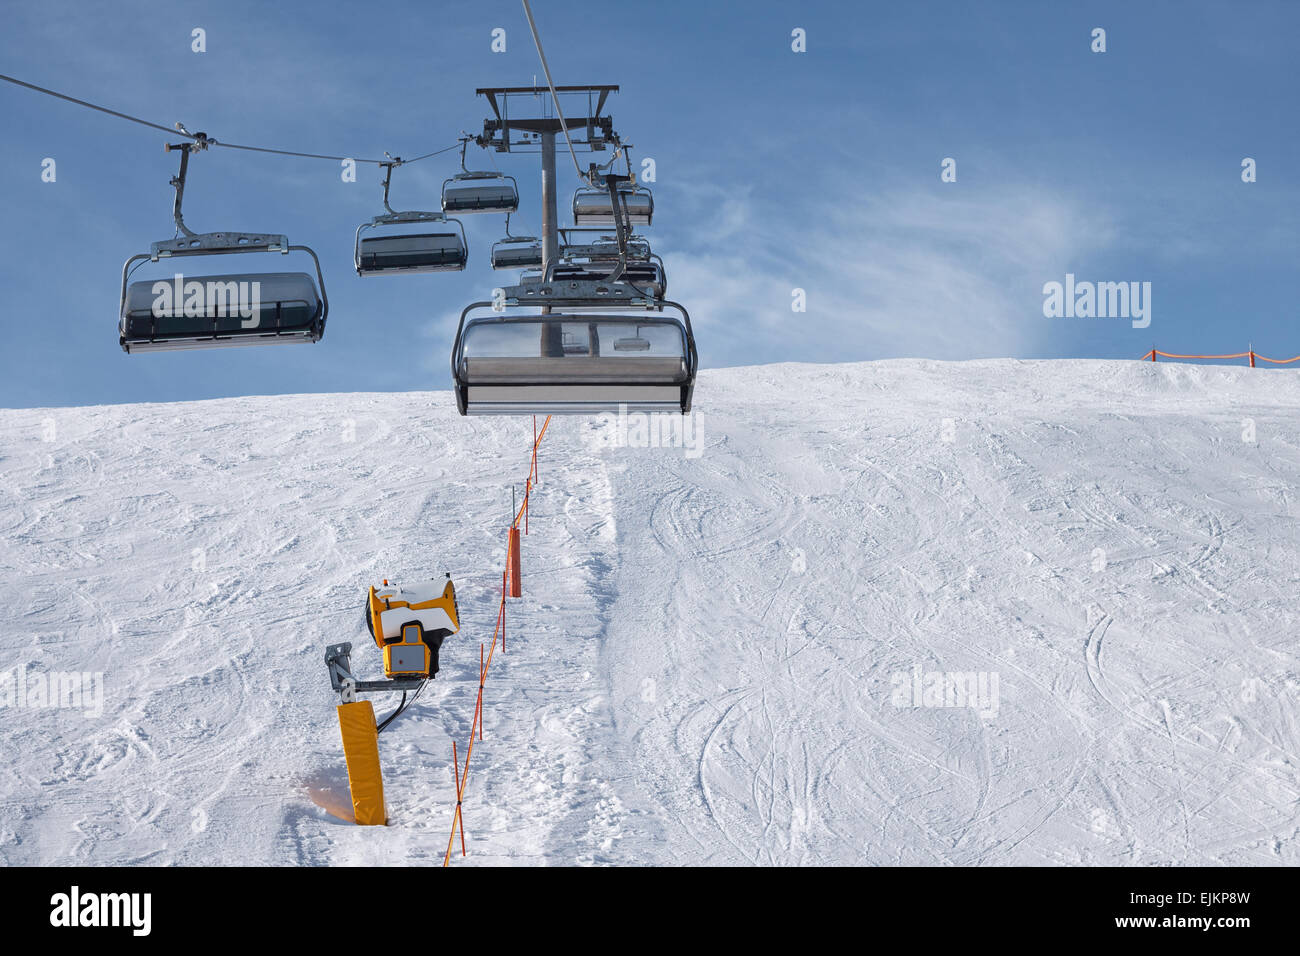 Sessellift Skipiste und Schnee Kanone Maschine Stockfoto